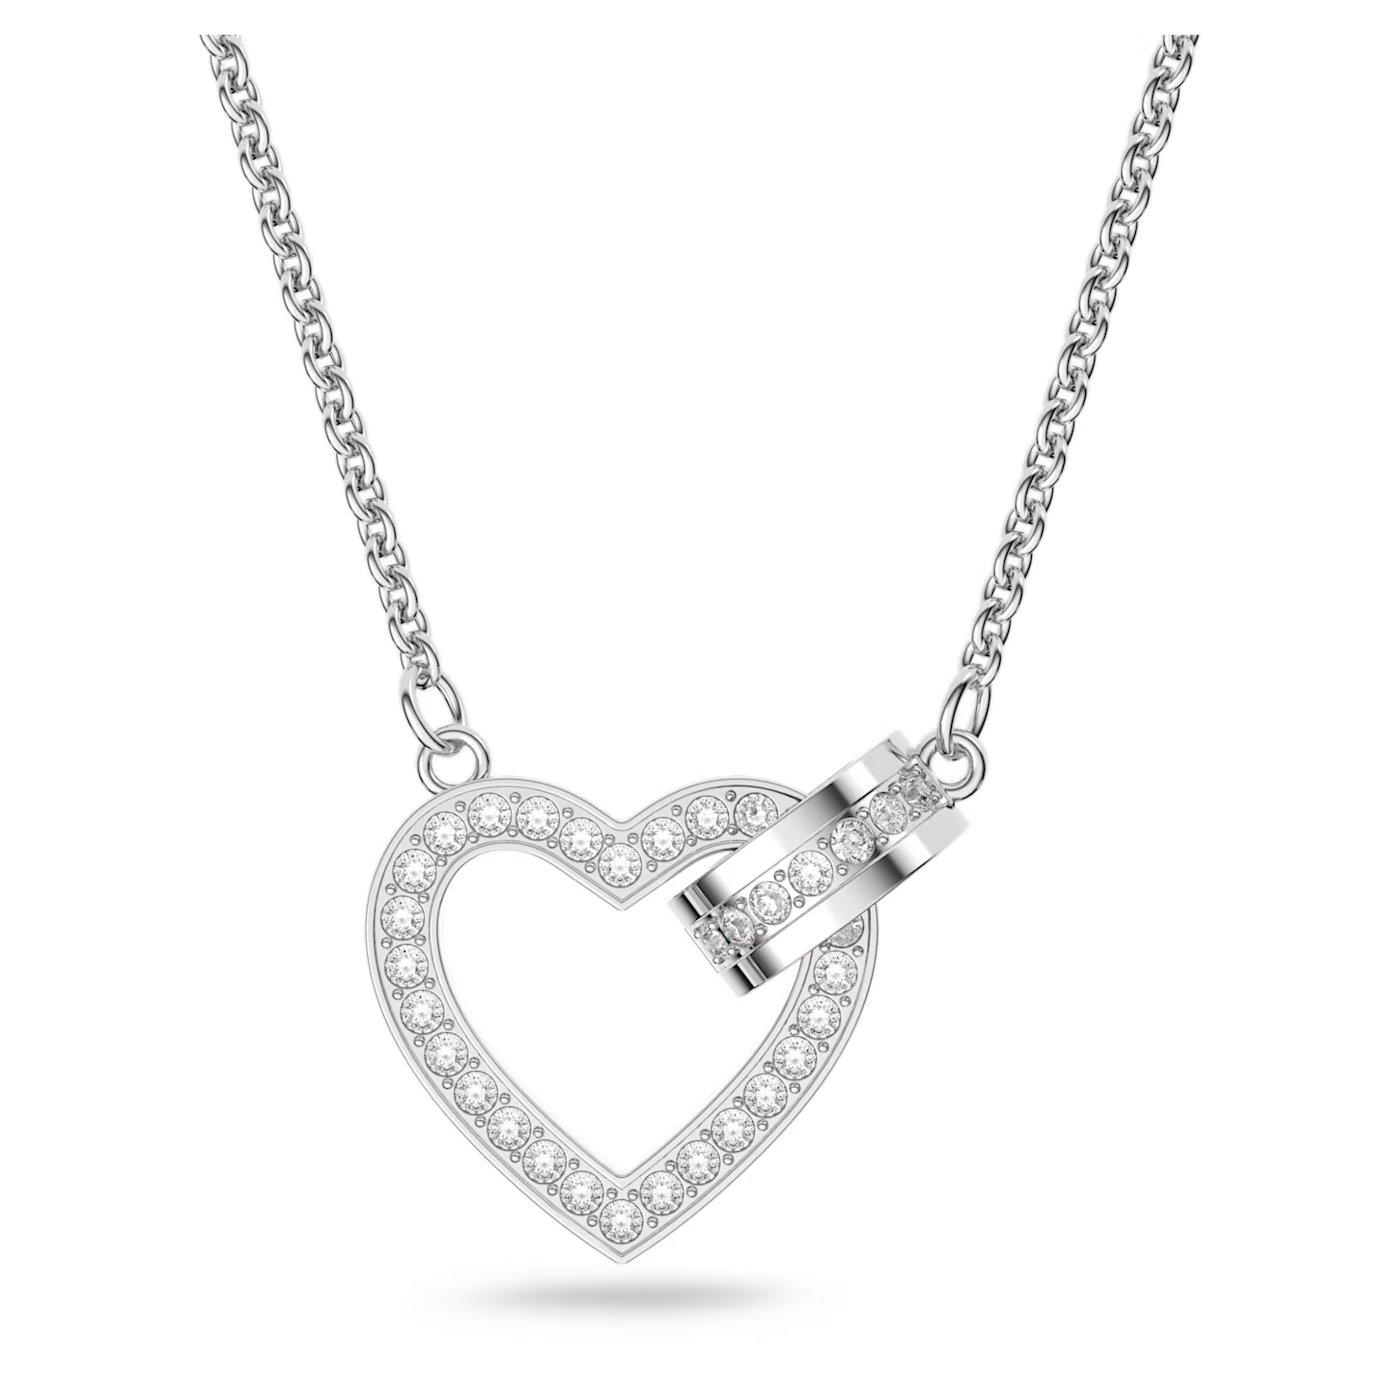 62f3bd6106424_px-lovely-necklace--heart--white--rhodium-plated-swarovski-5636444.jpg